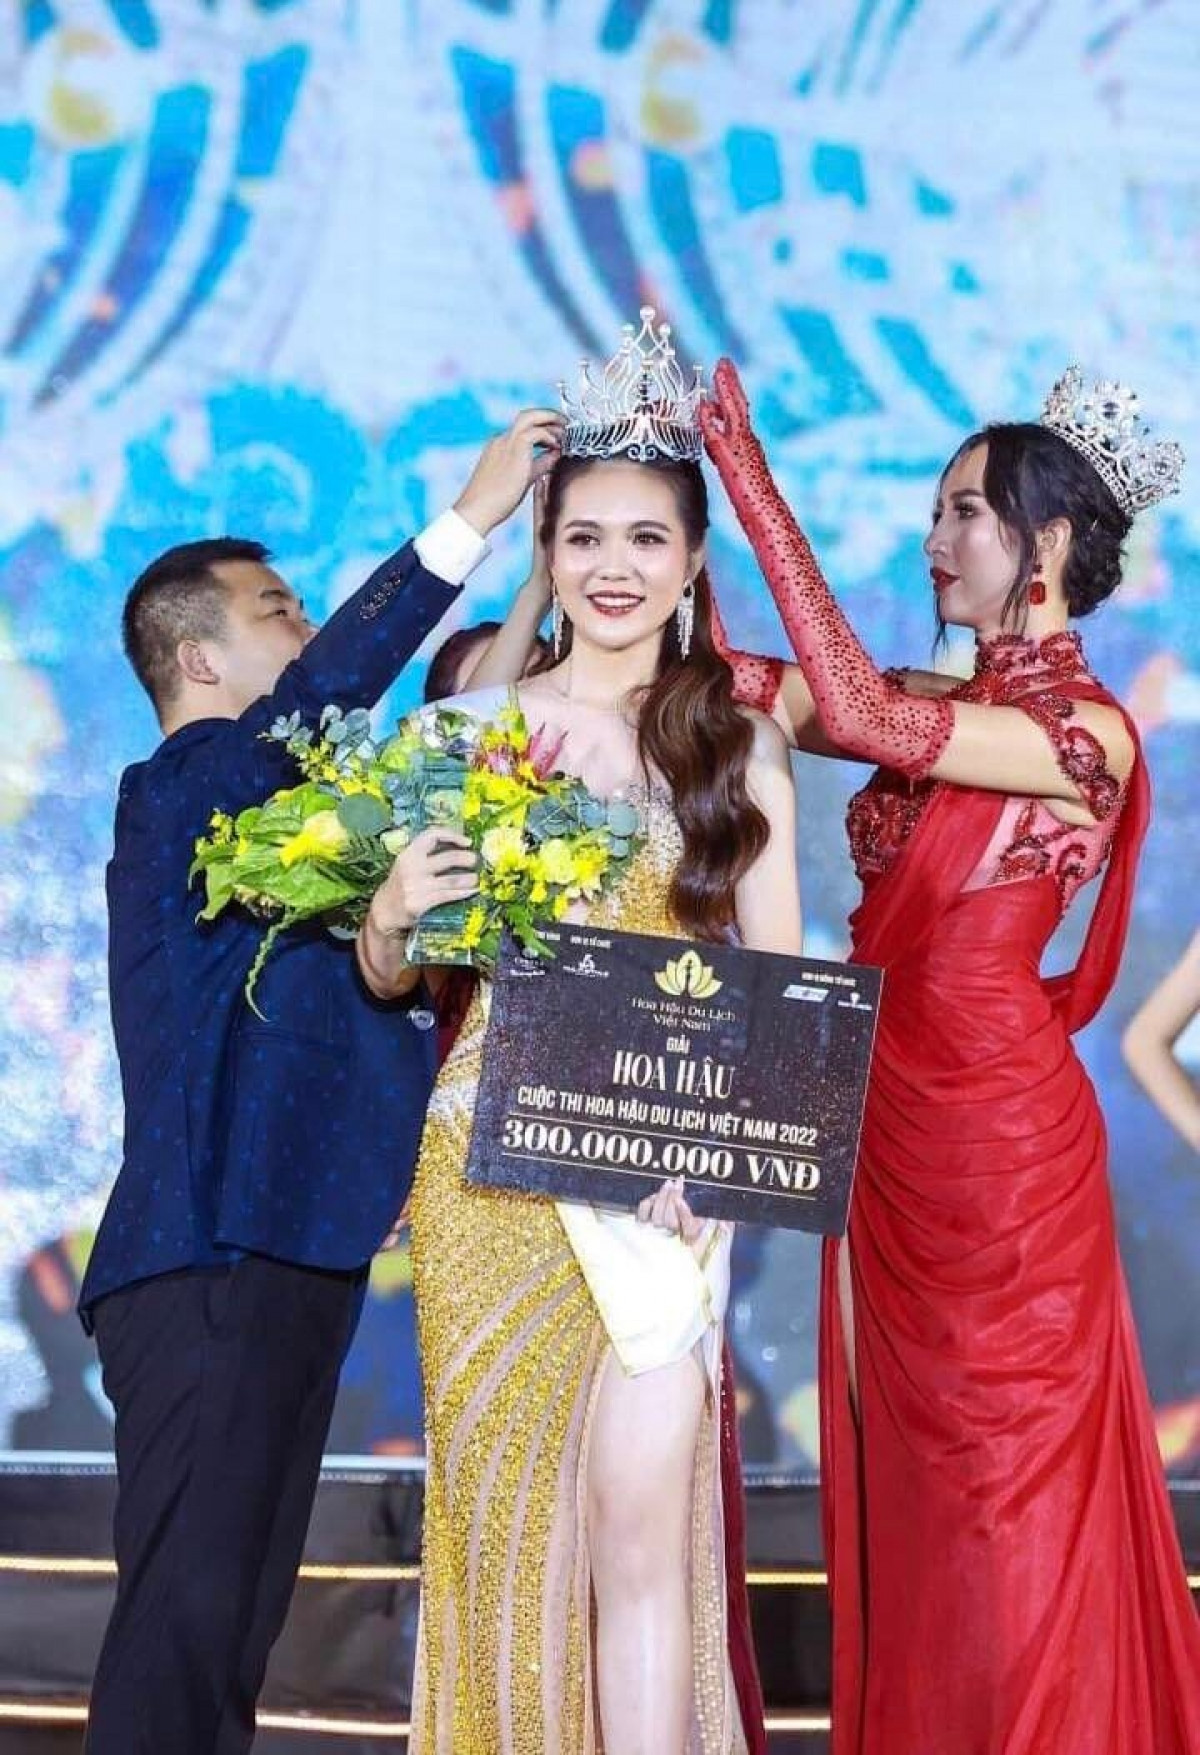 ky duyen crowned miss tourism vietnam 2022 picture 1